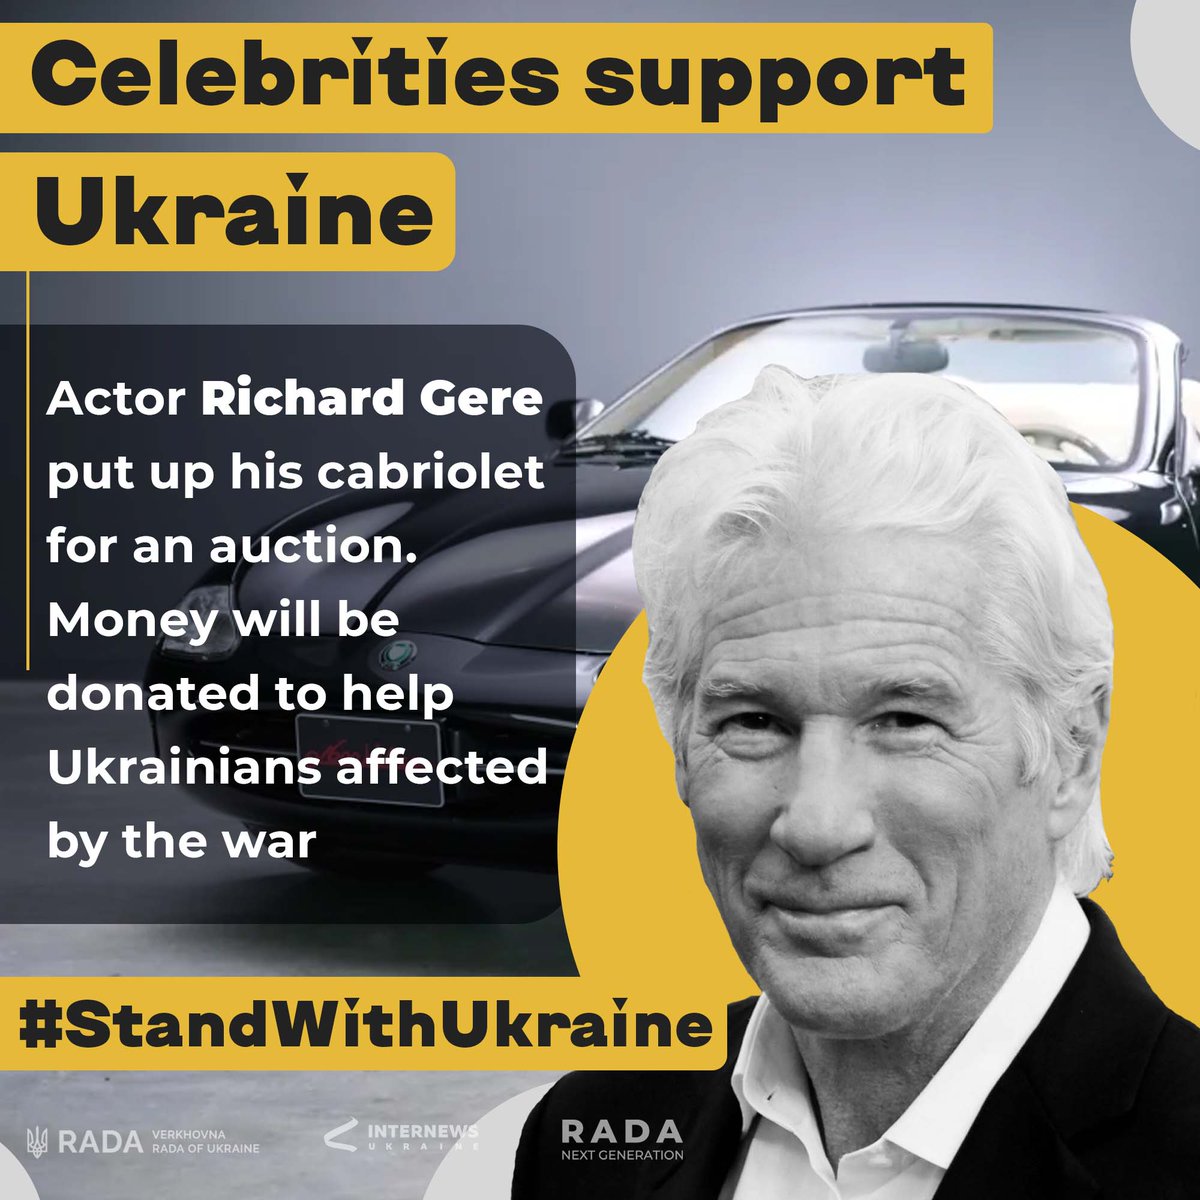 Legendary Hollywood actor Richard Gere supported the Ukrainians.
#StandWithUkraine 
#IStandWithUkraine